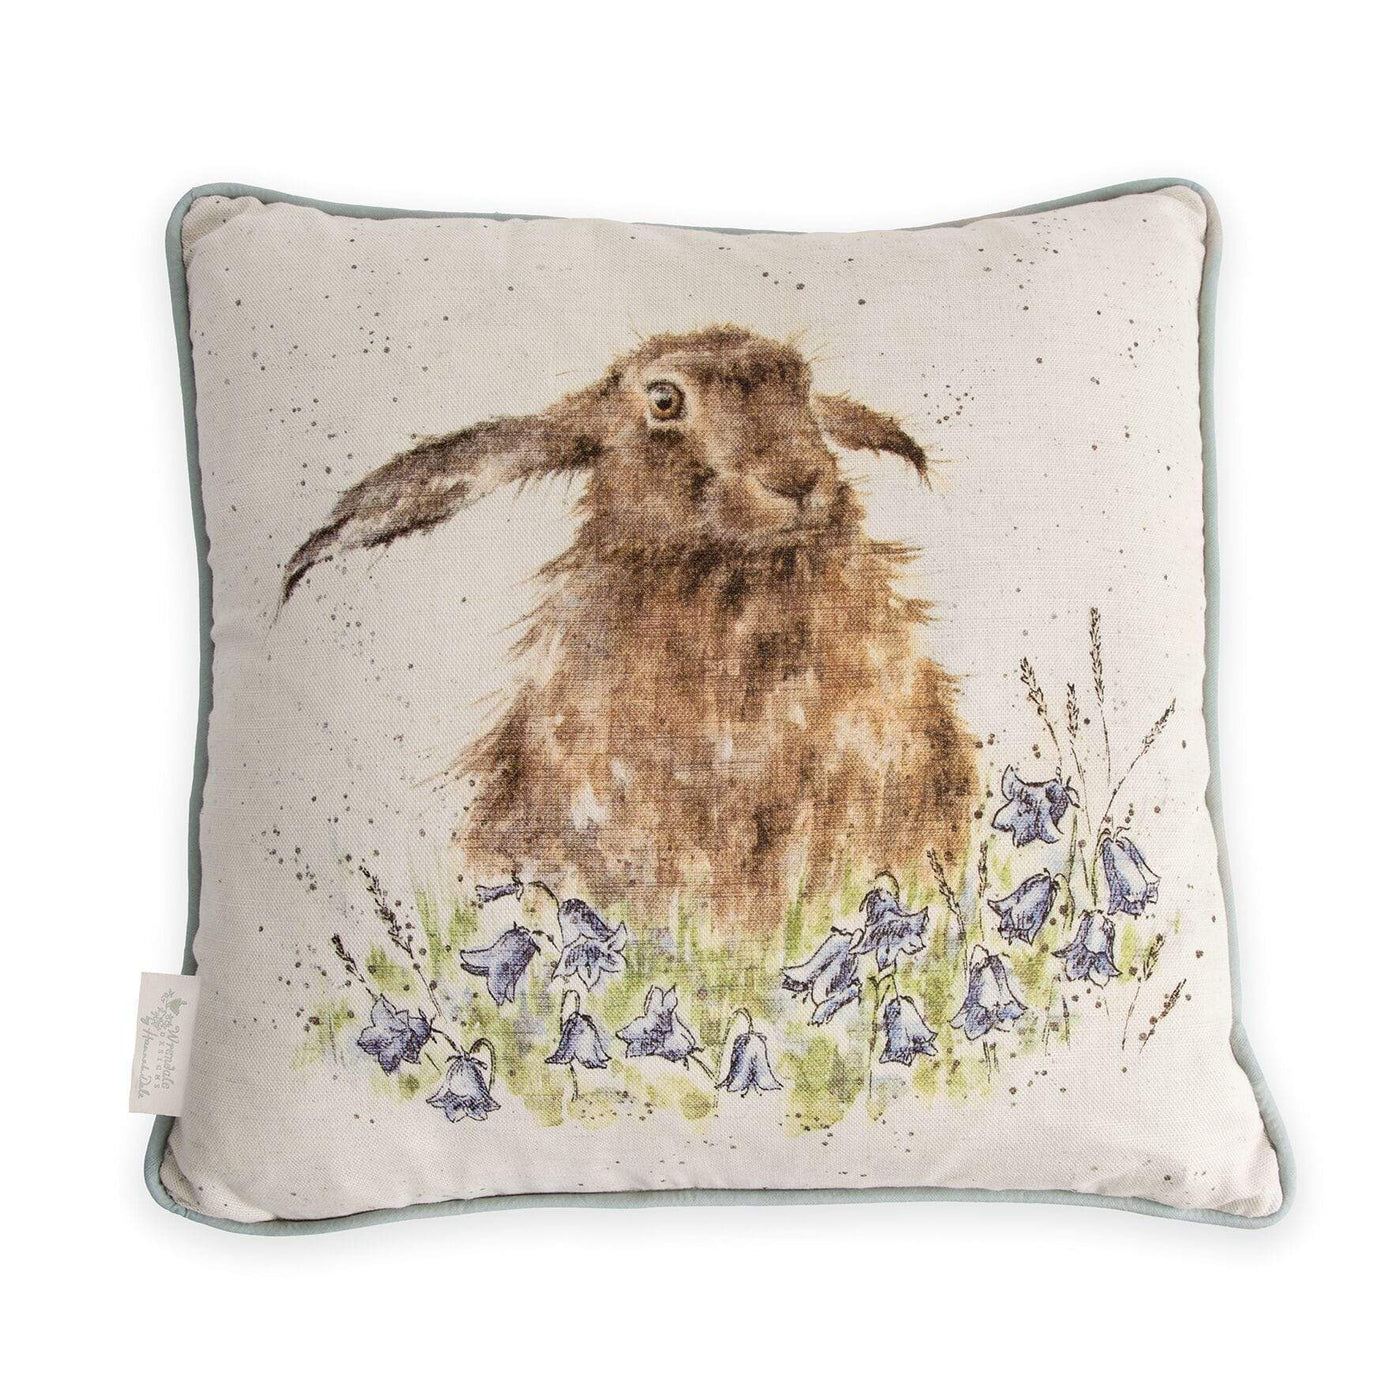 Wrendale Designs Cushions Bright Eyes Hare Cushion